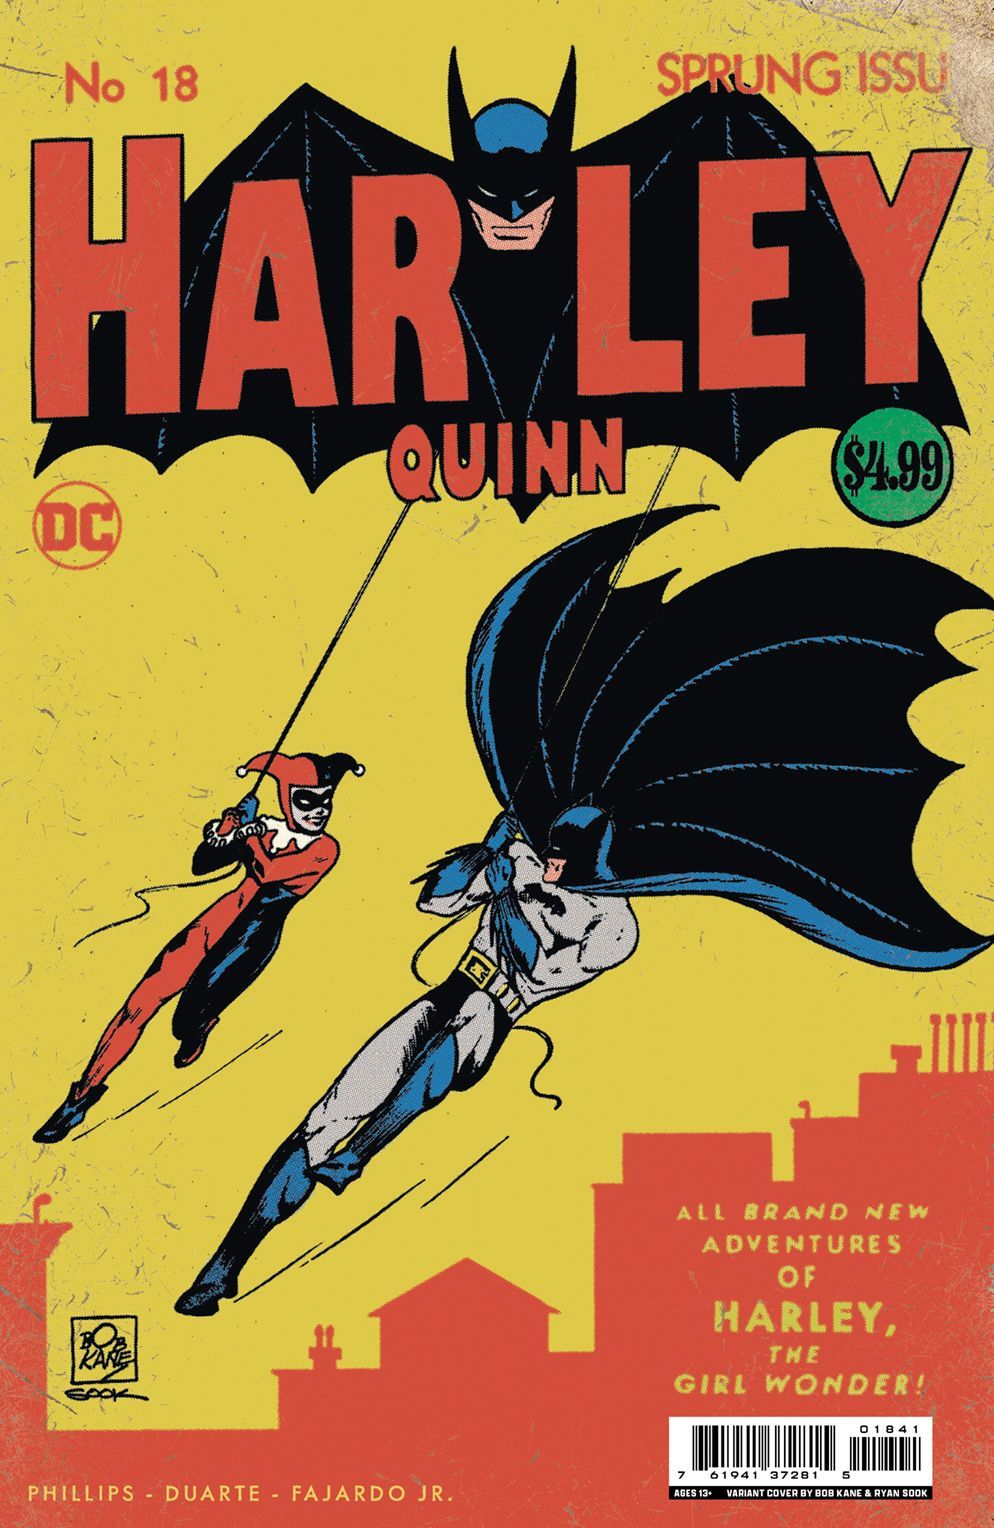 Harley Quinn #18 cover